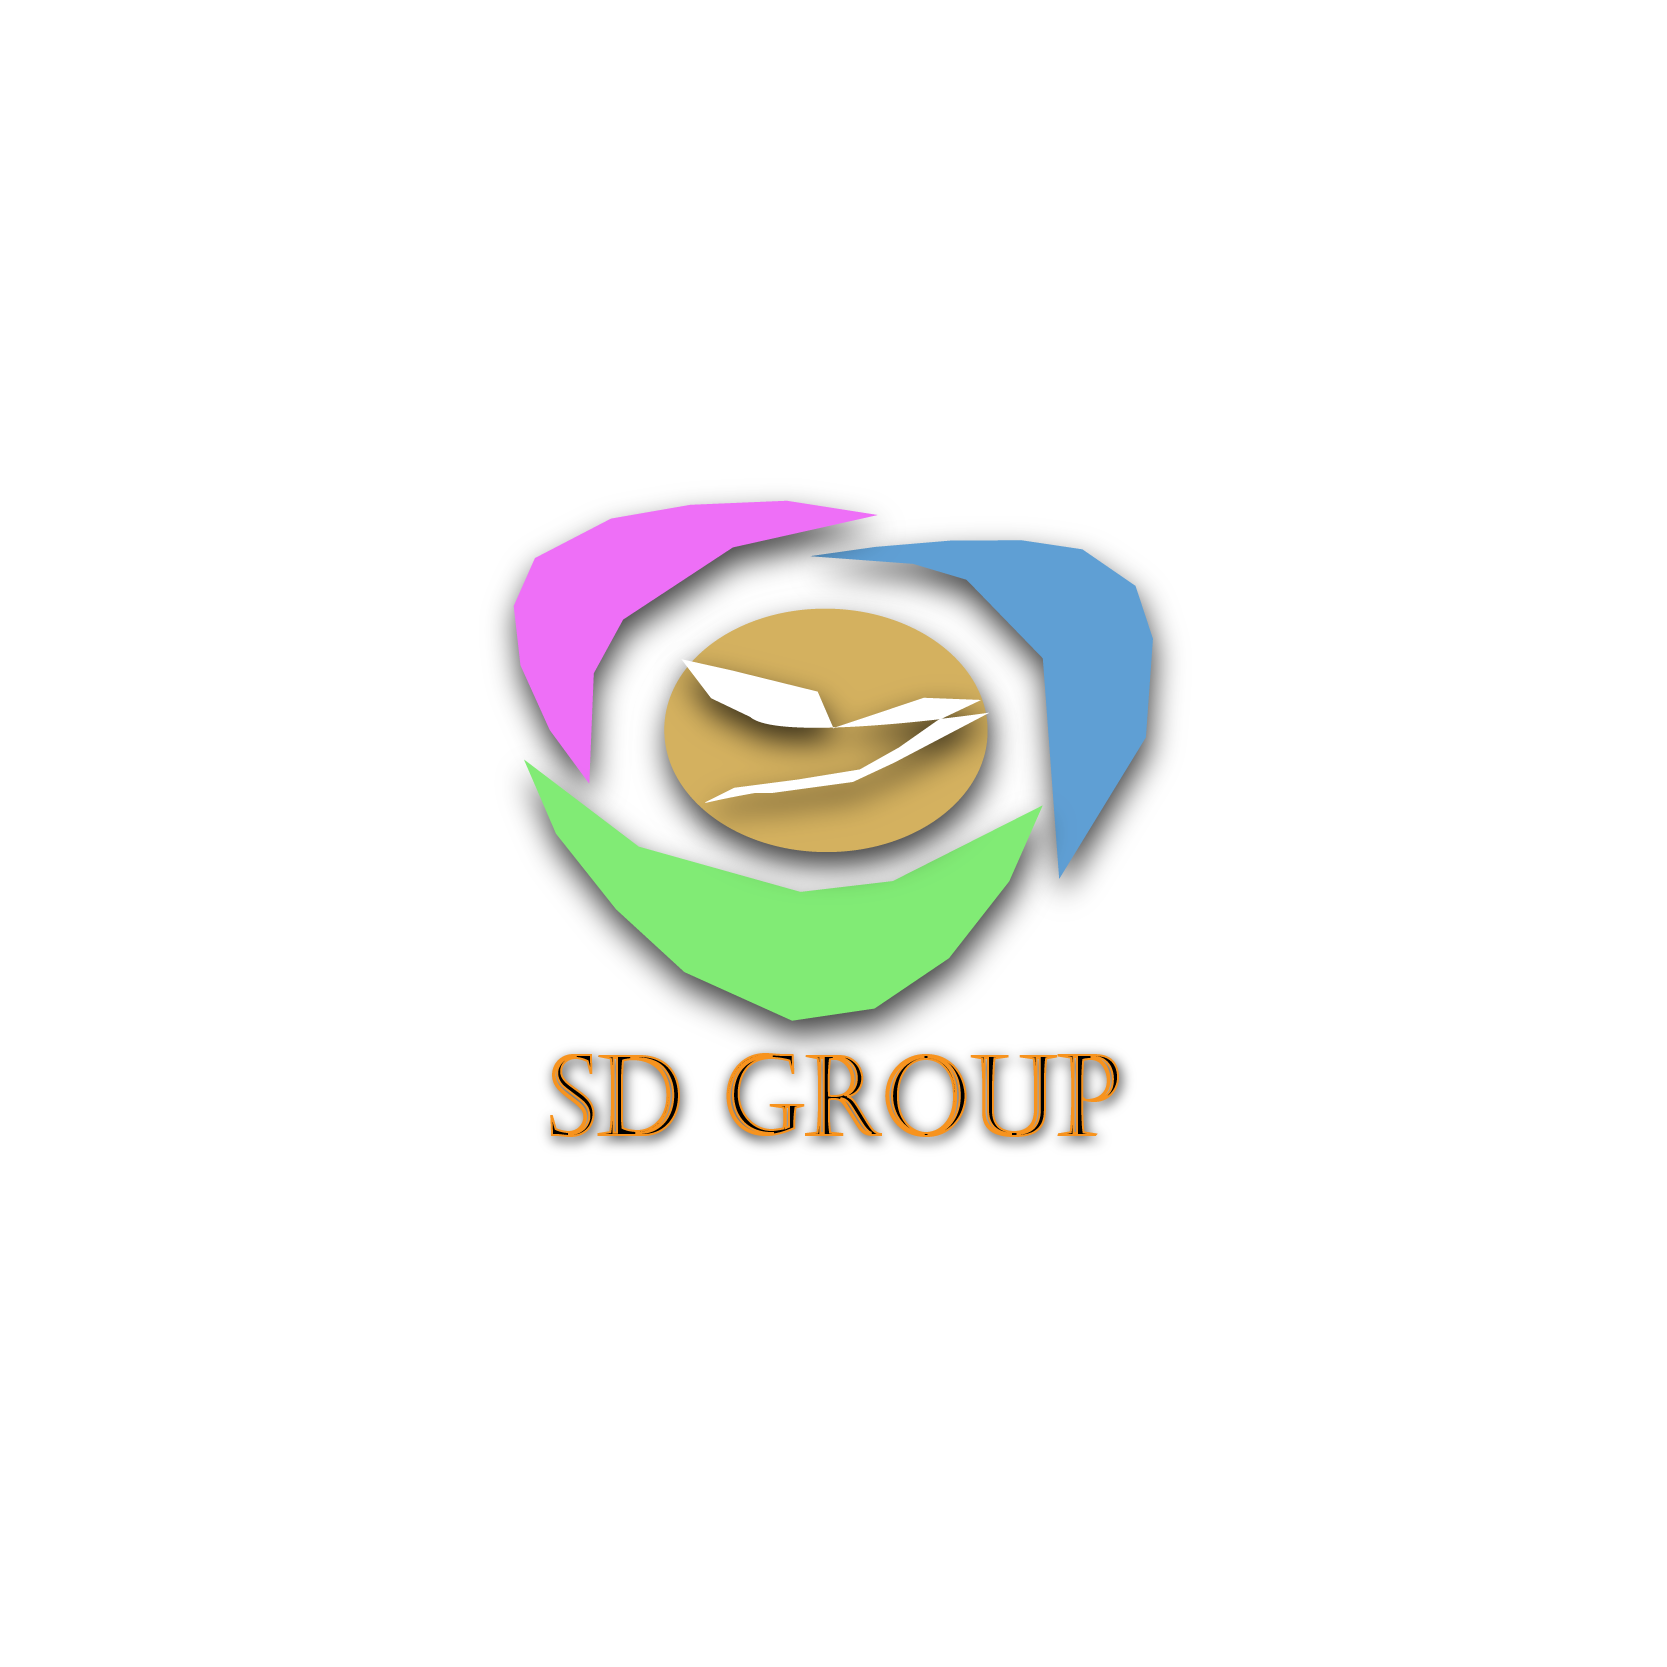 Professional emblem logo style for business enterprise or commercial enterprise